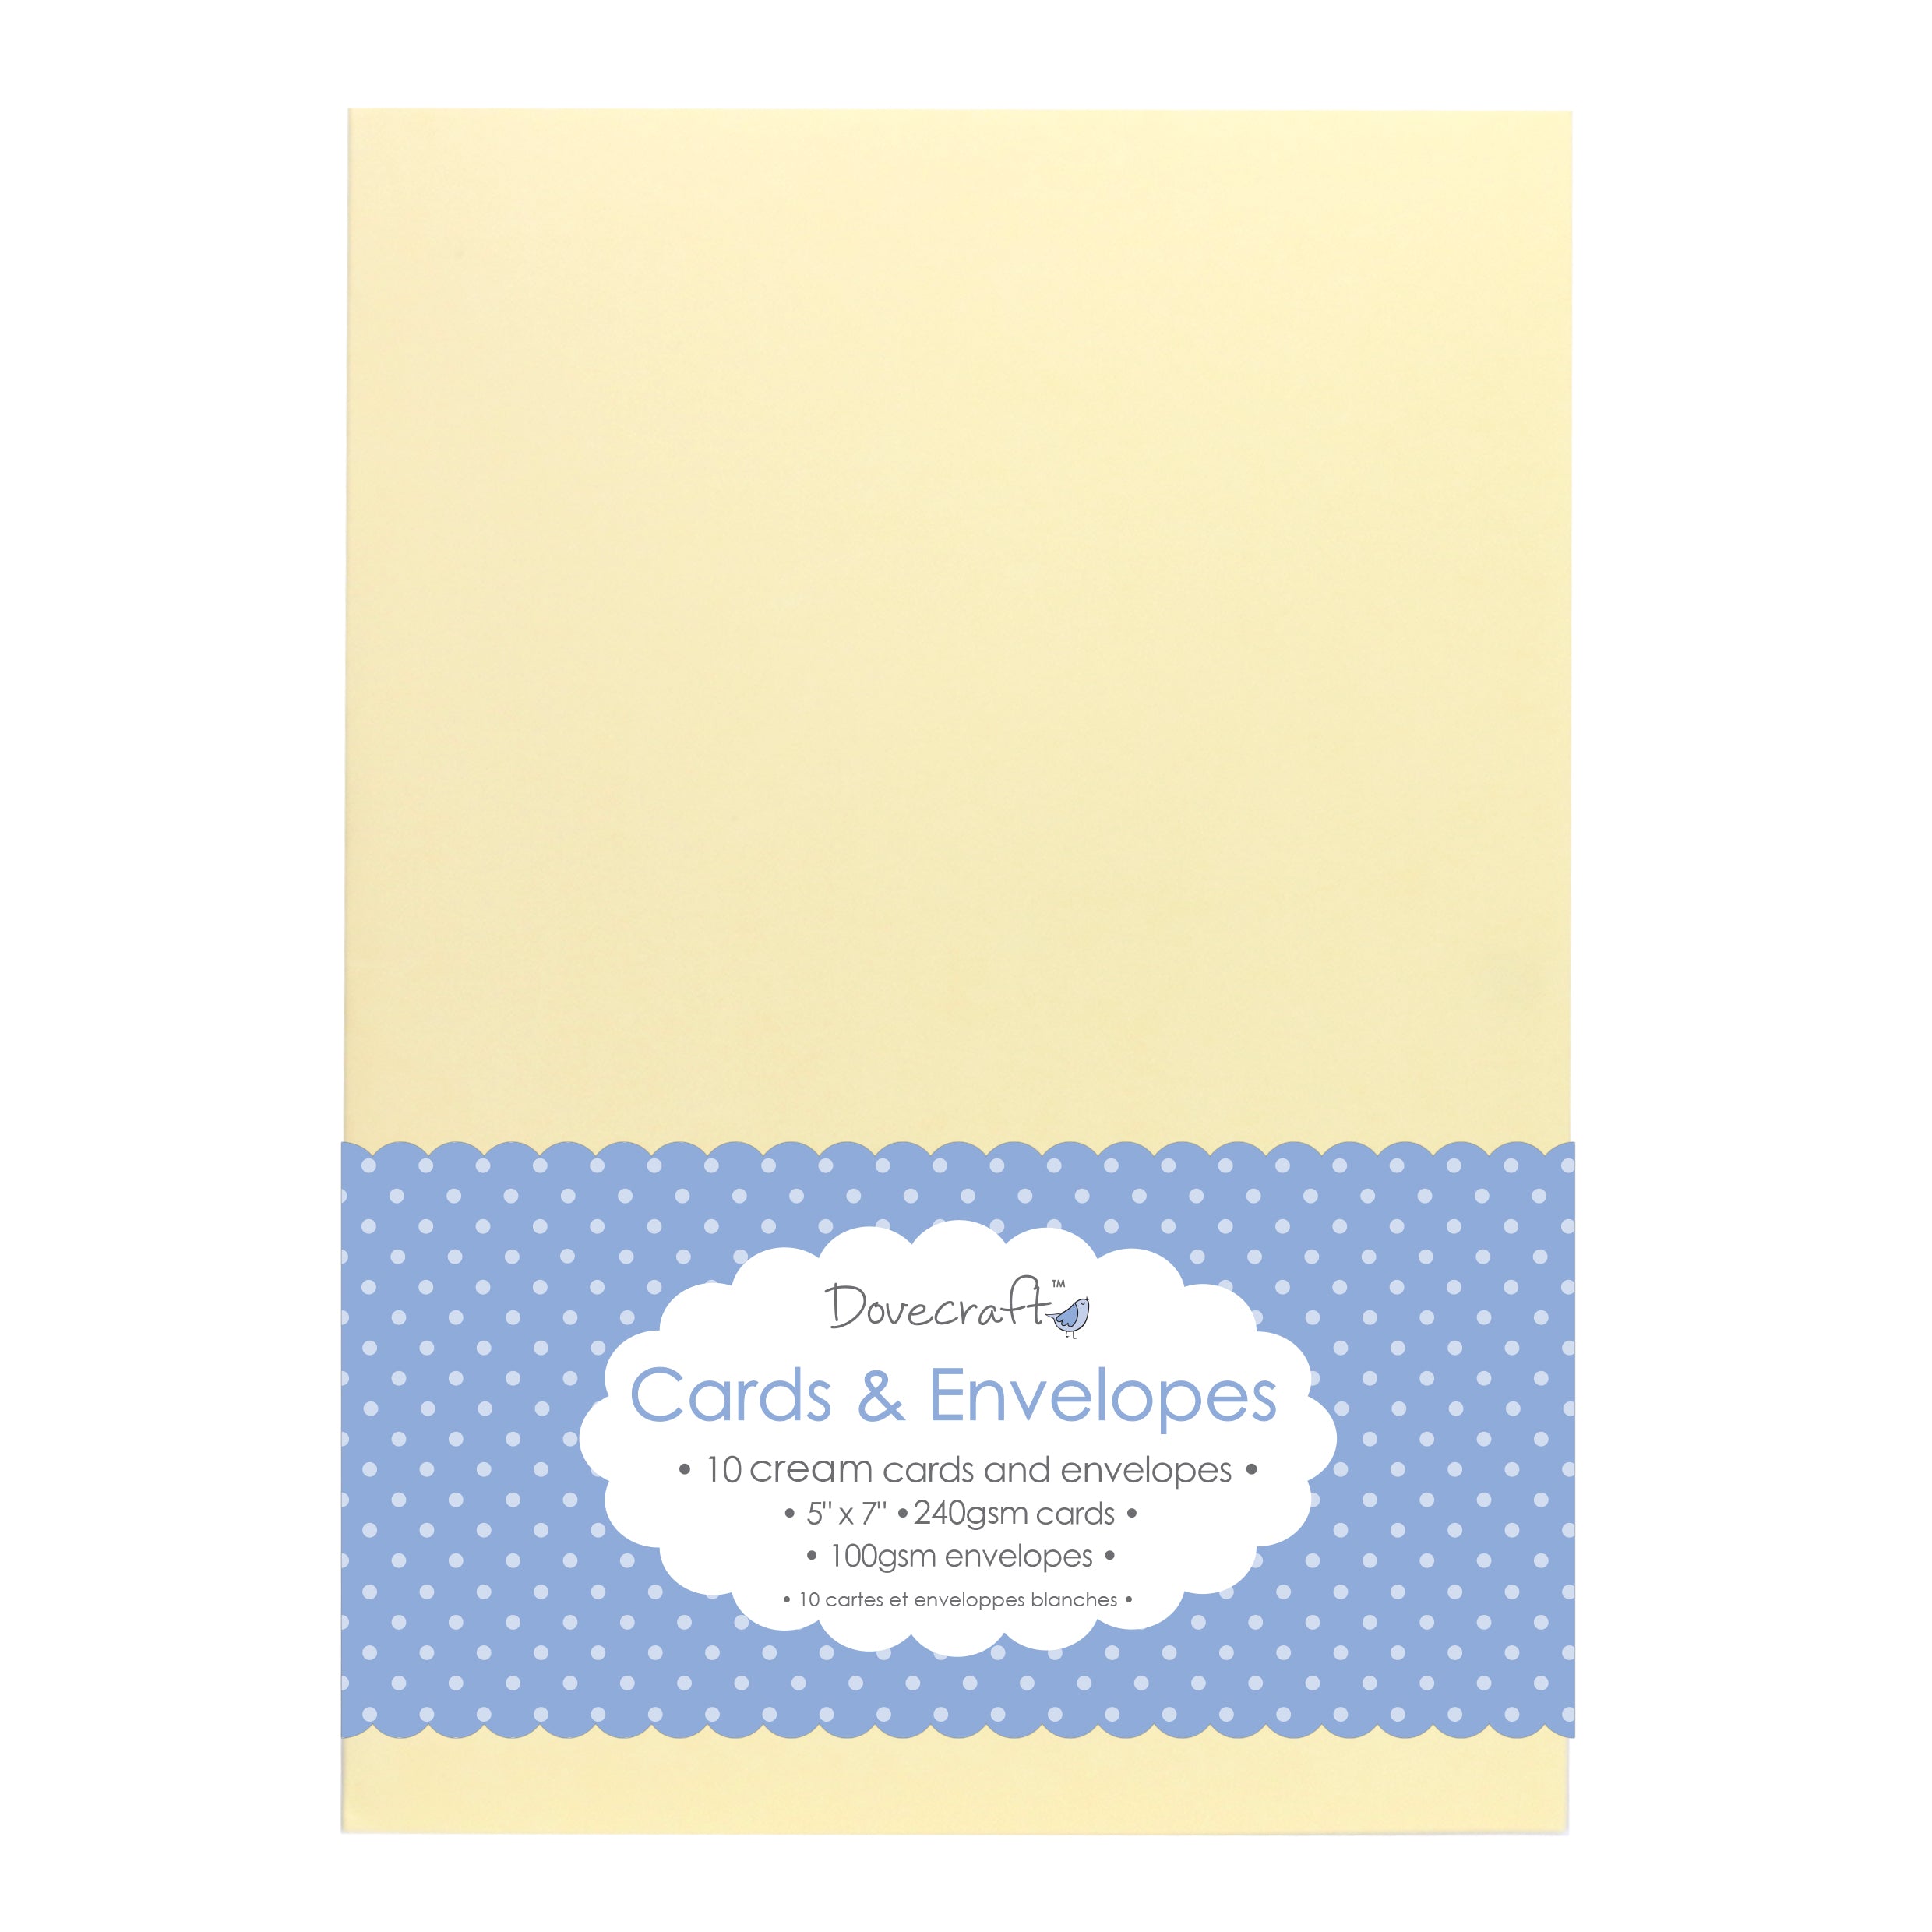 Dovecraft Cards & Envelopes - Cream